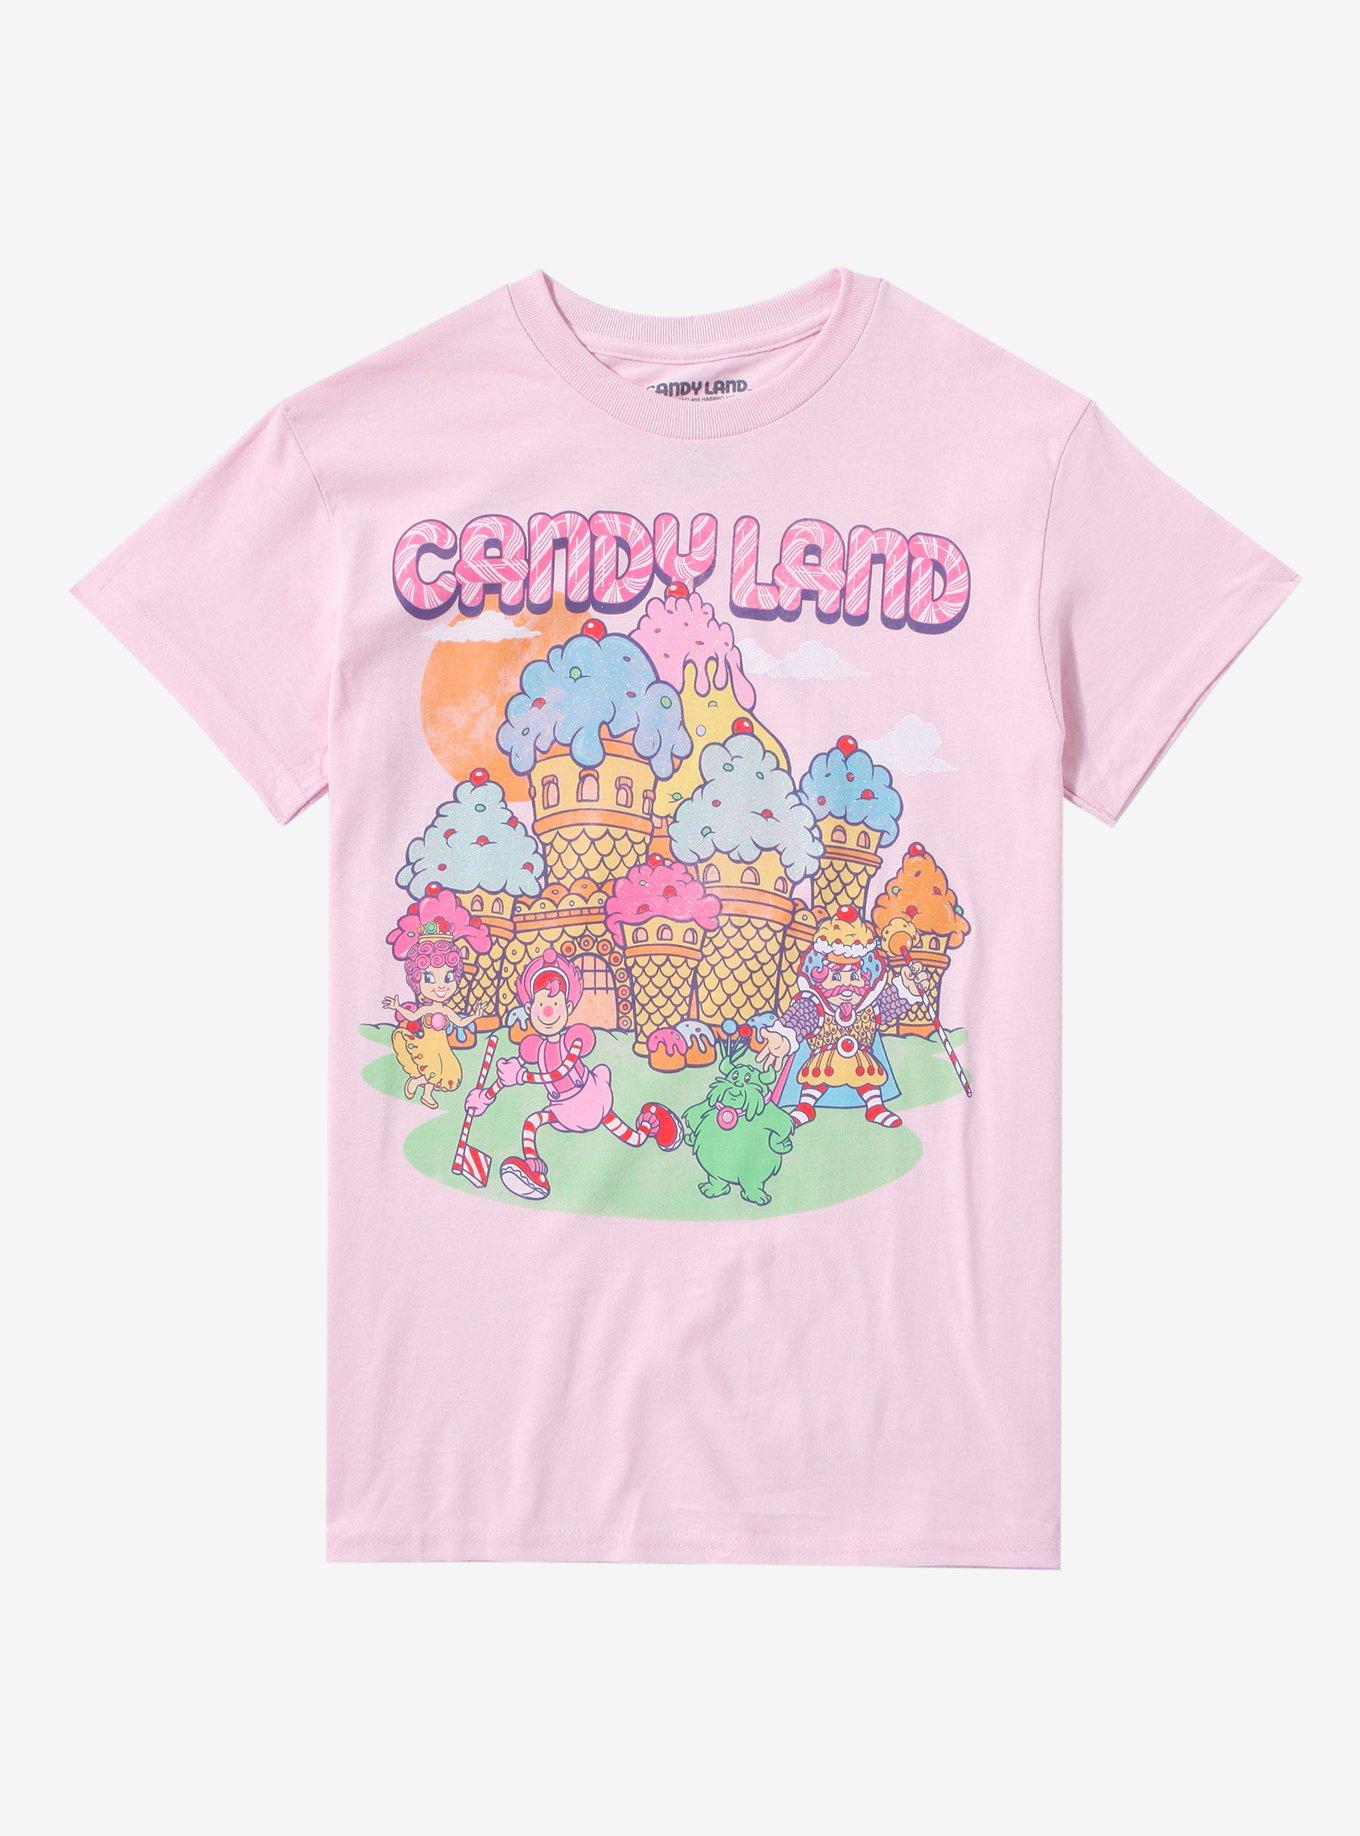 Candy Land Castle Pink Glitter Boyfriend Fit Girls T-Shirt, , hi-res